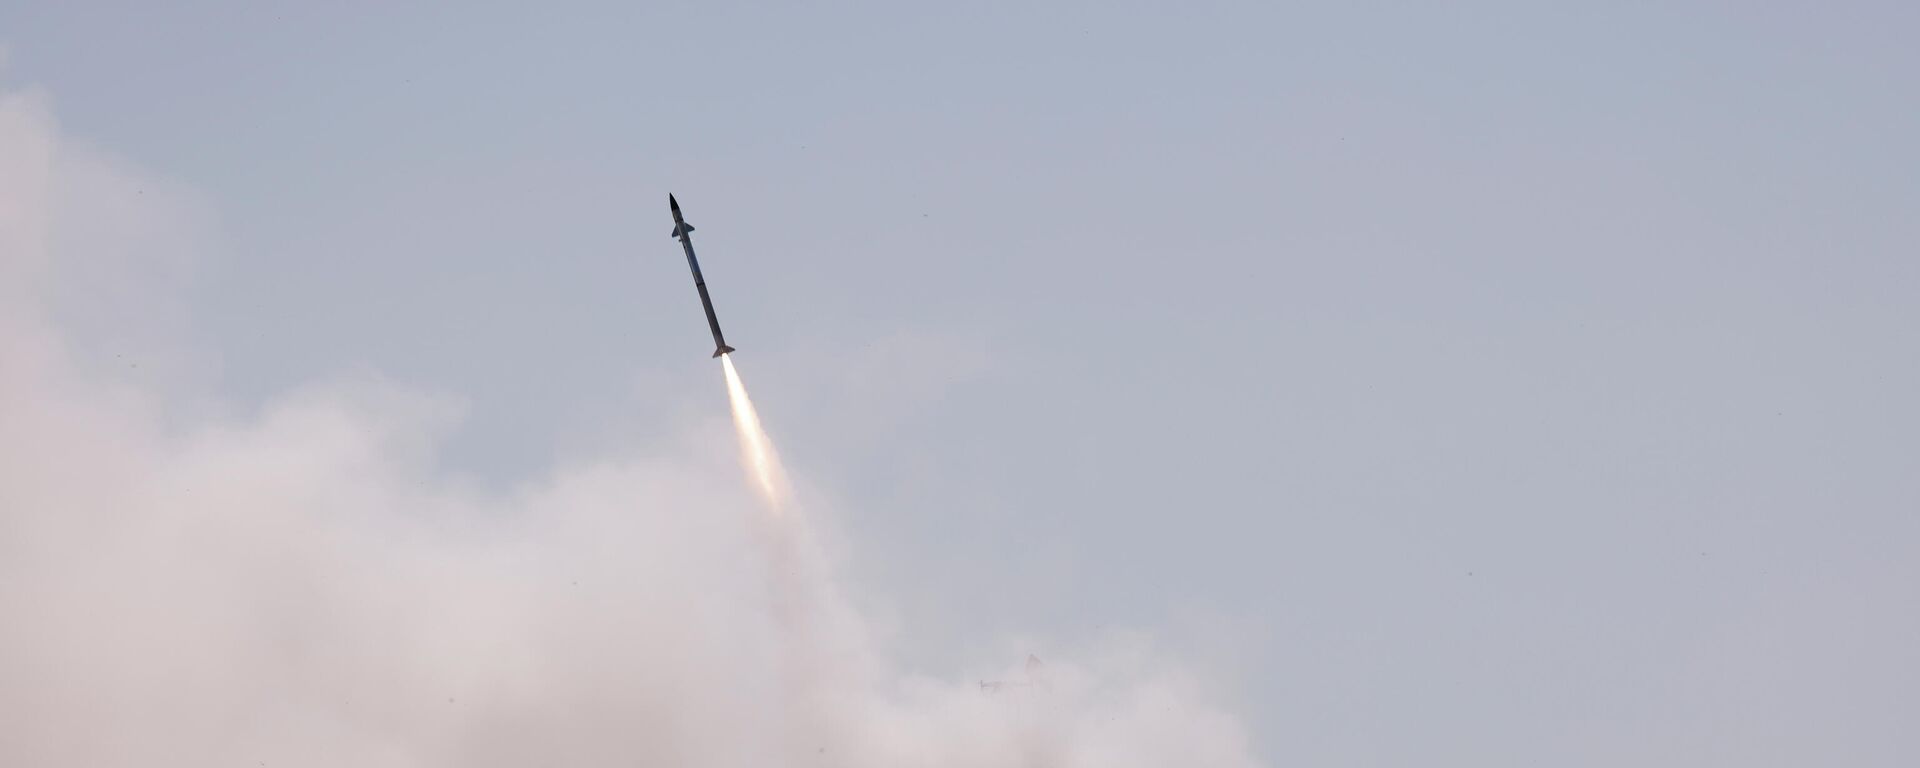 La Cúpula de Hierro israelí intercepta misiles lanzados desde Gaza - Sputnik Mundo, 1920, 12.05.2021